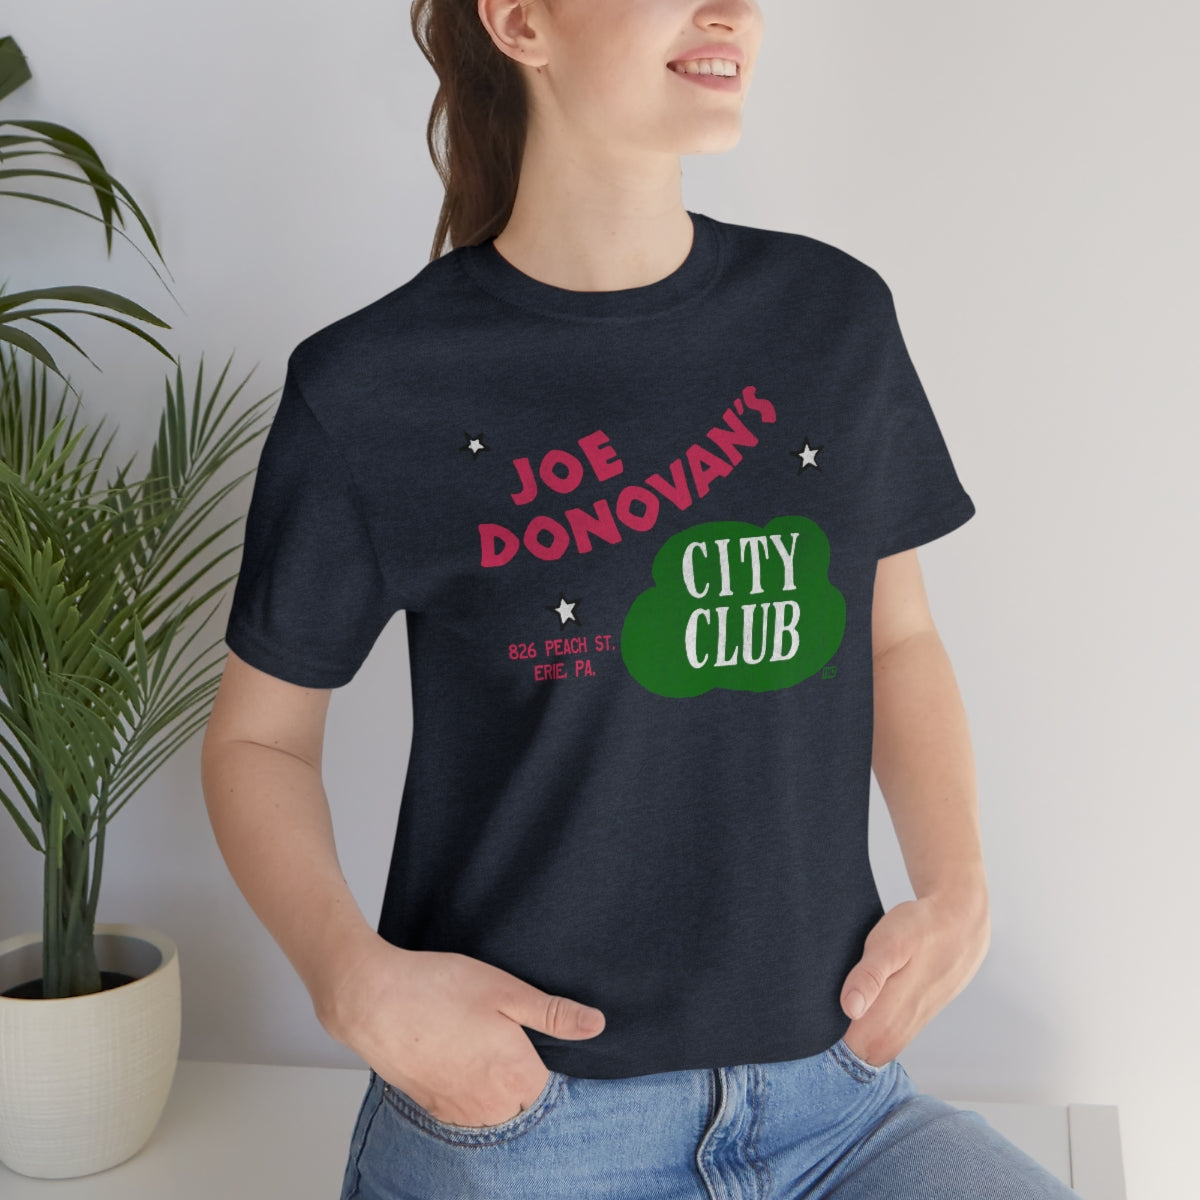 JOE DONOVAN'S CITY CLUB - ERIE, PA - Yinzylvania